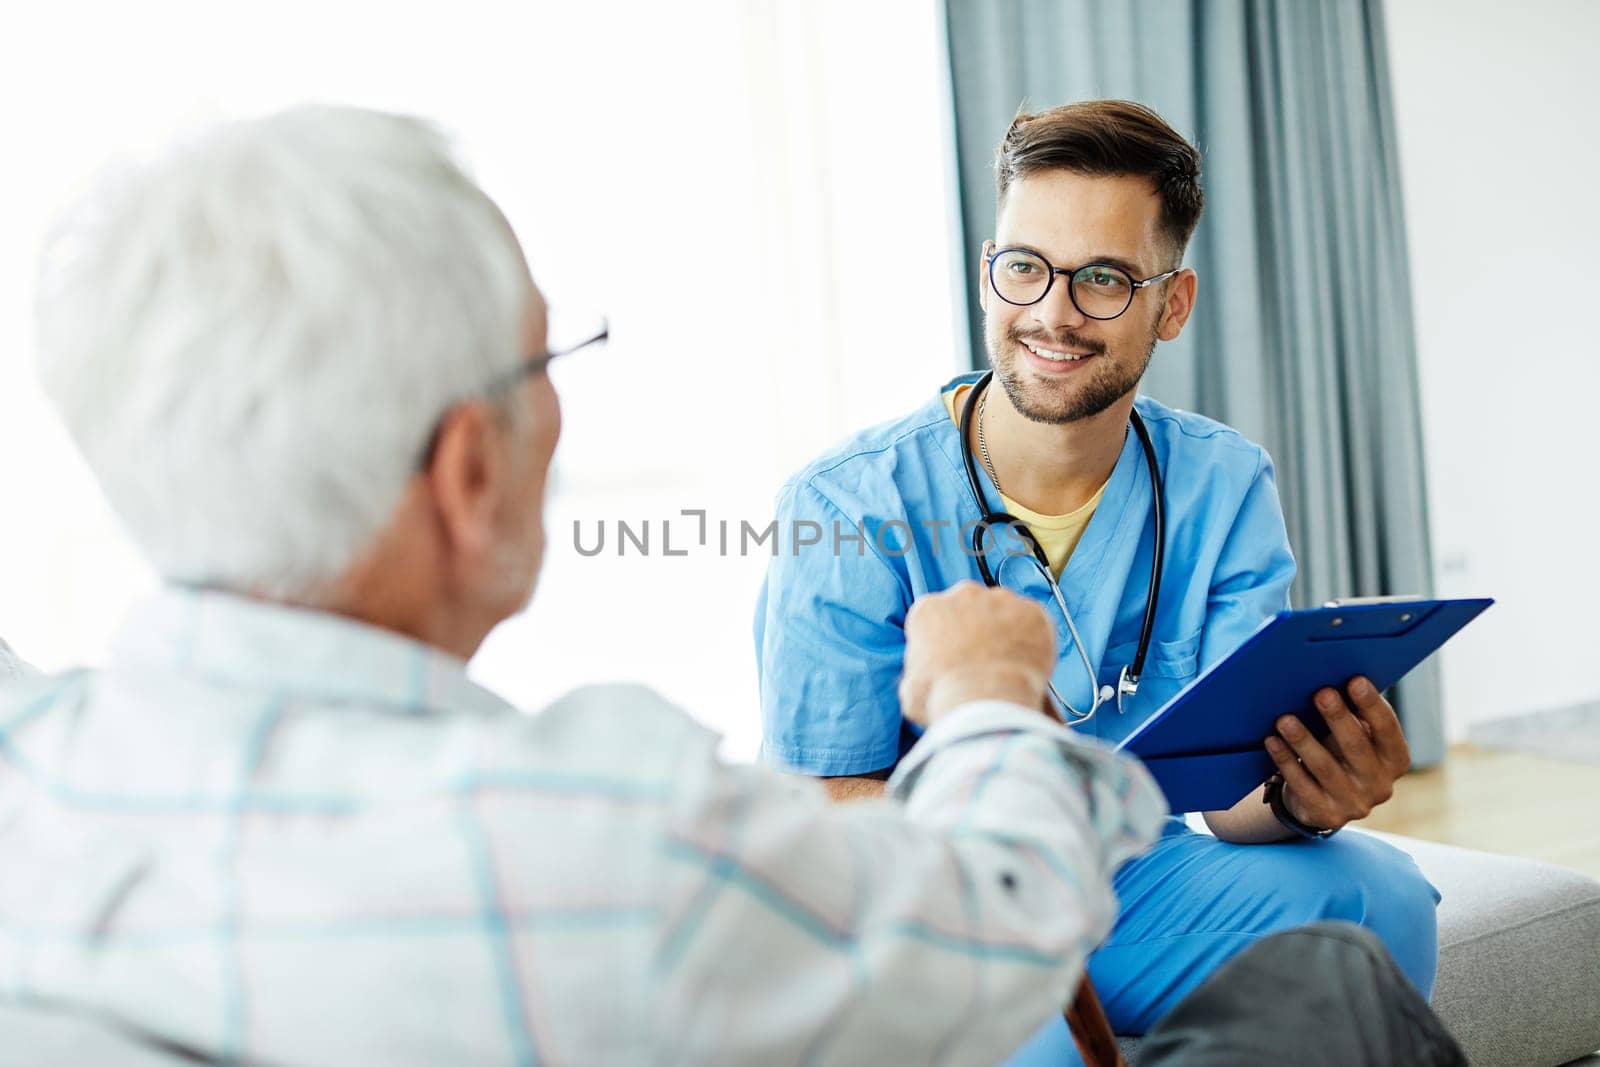 nurse doctor senior care caregiver help assistence retirement home hospital nursing elderly man caregiver by Picsfive